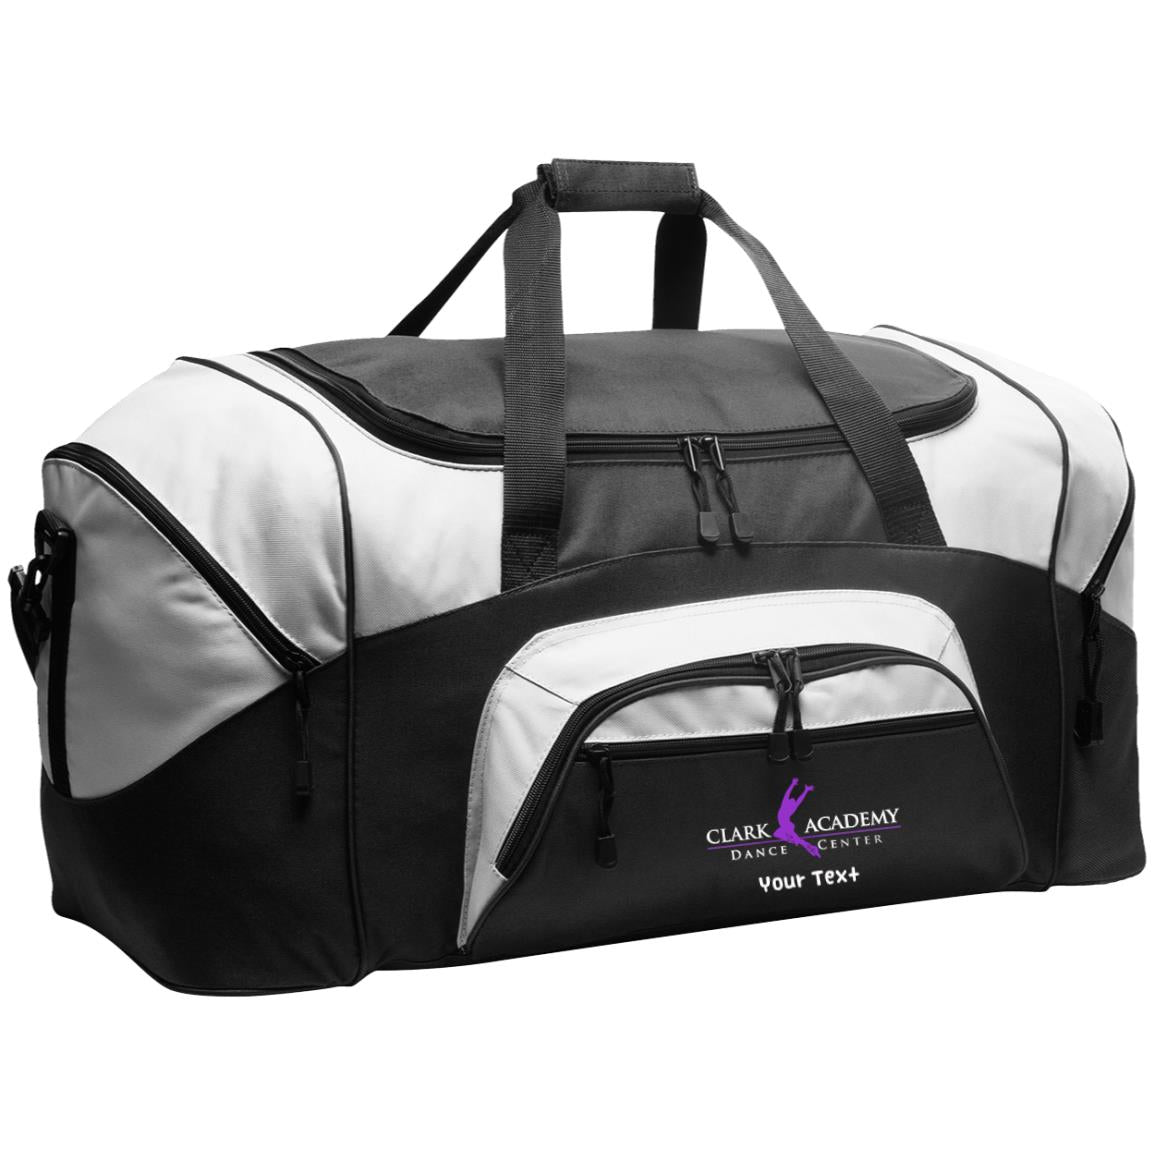 CADC Large Duffel Bag - Free Personalization